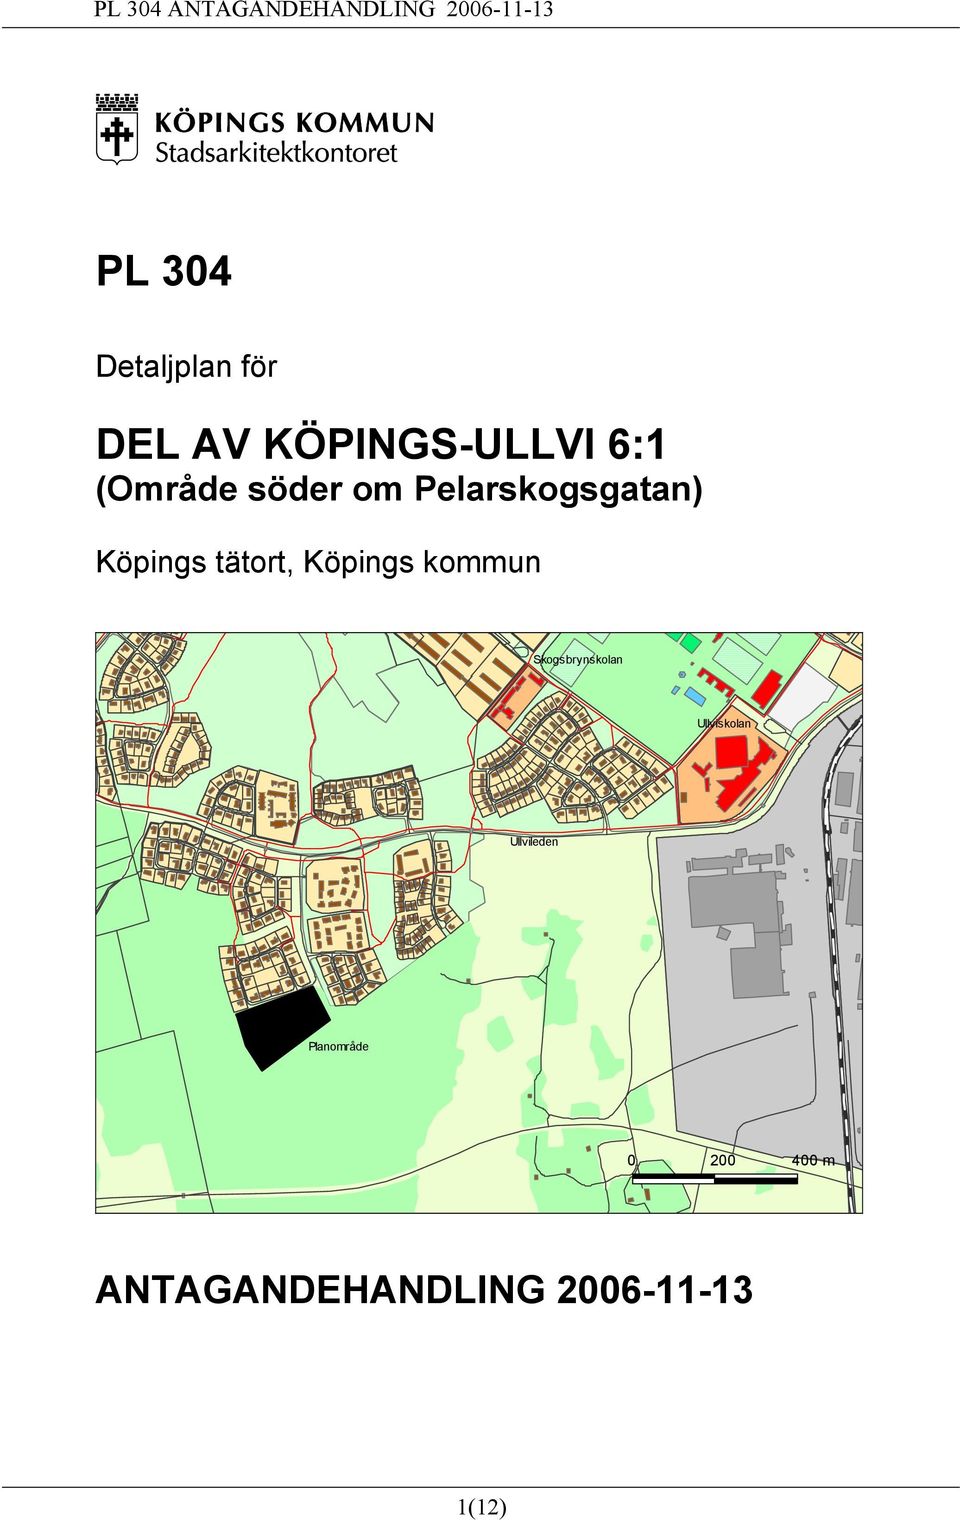 Köpings kommun Skogsbrynskolan Ullviskolan